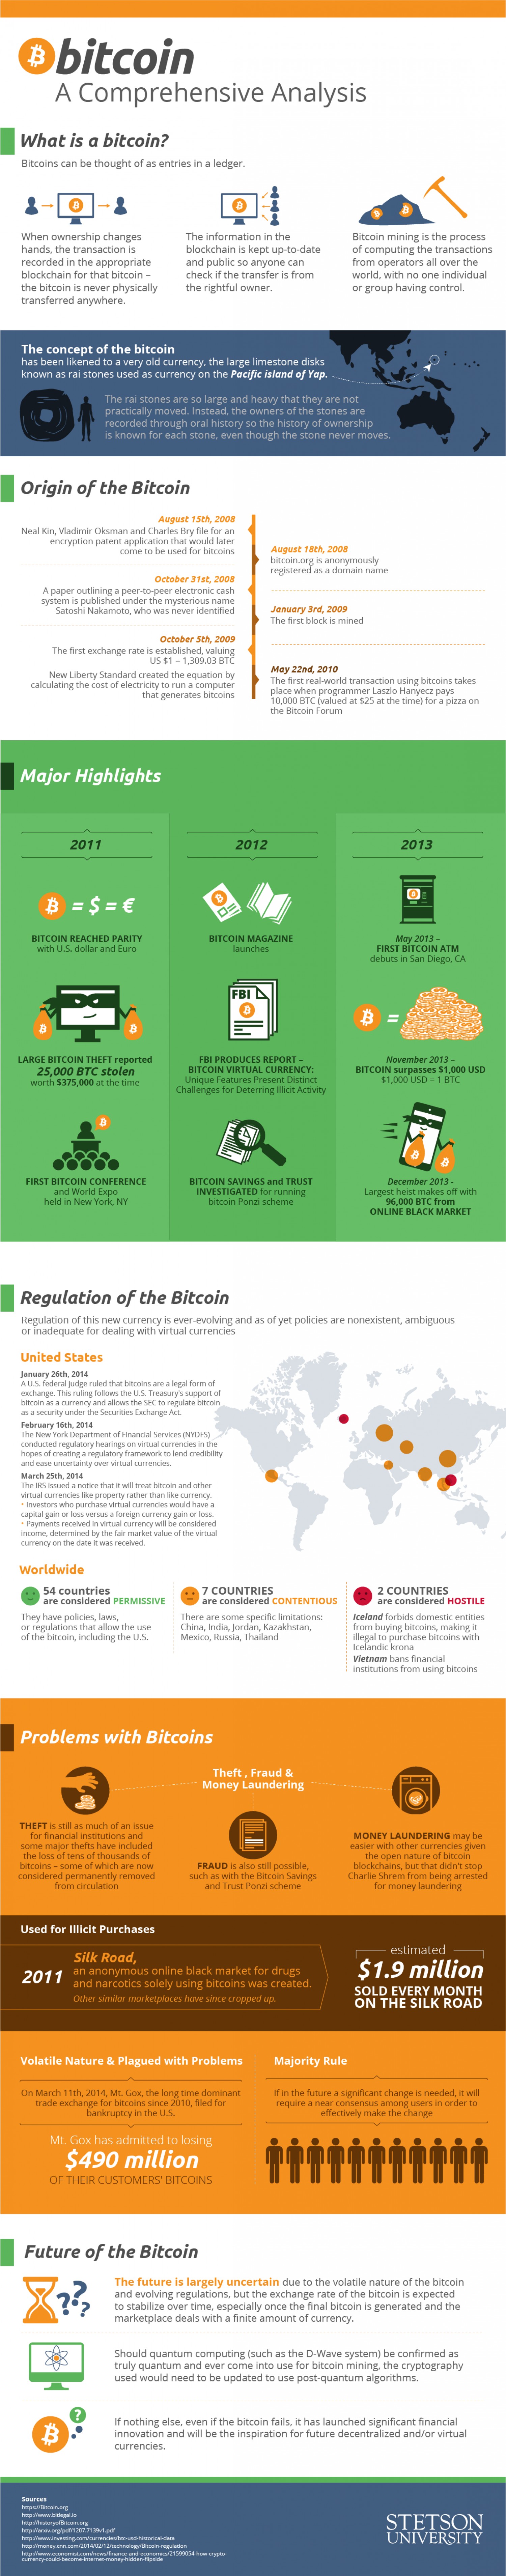 Bitcoin: The Past, Present, and Future